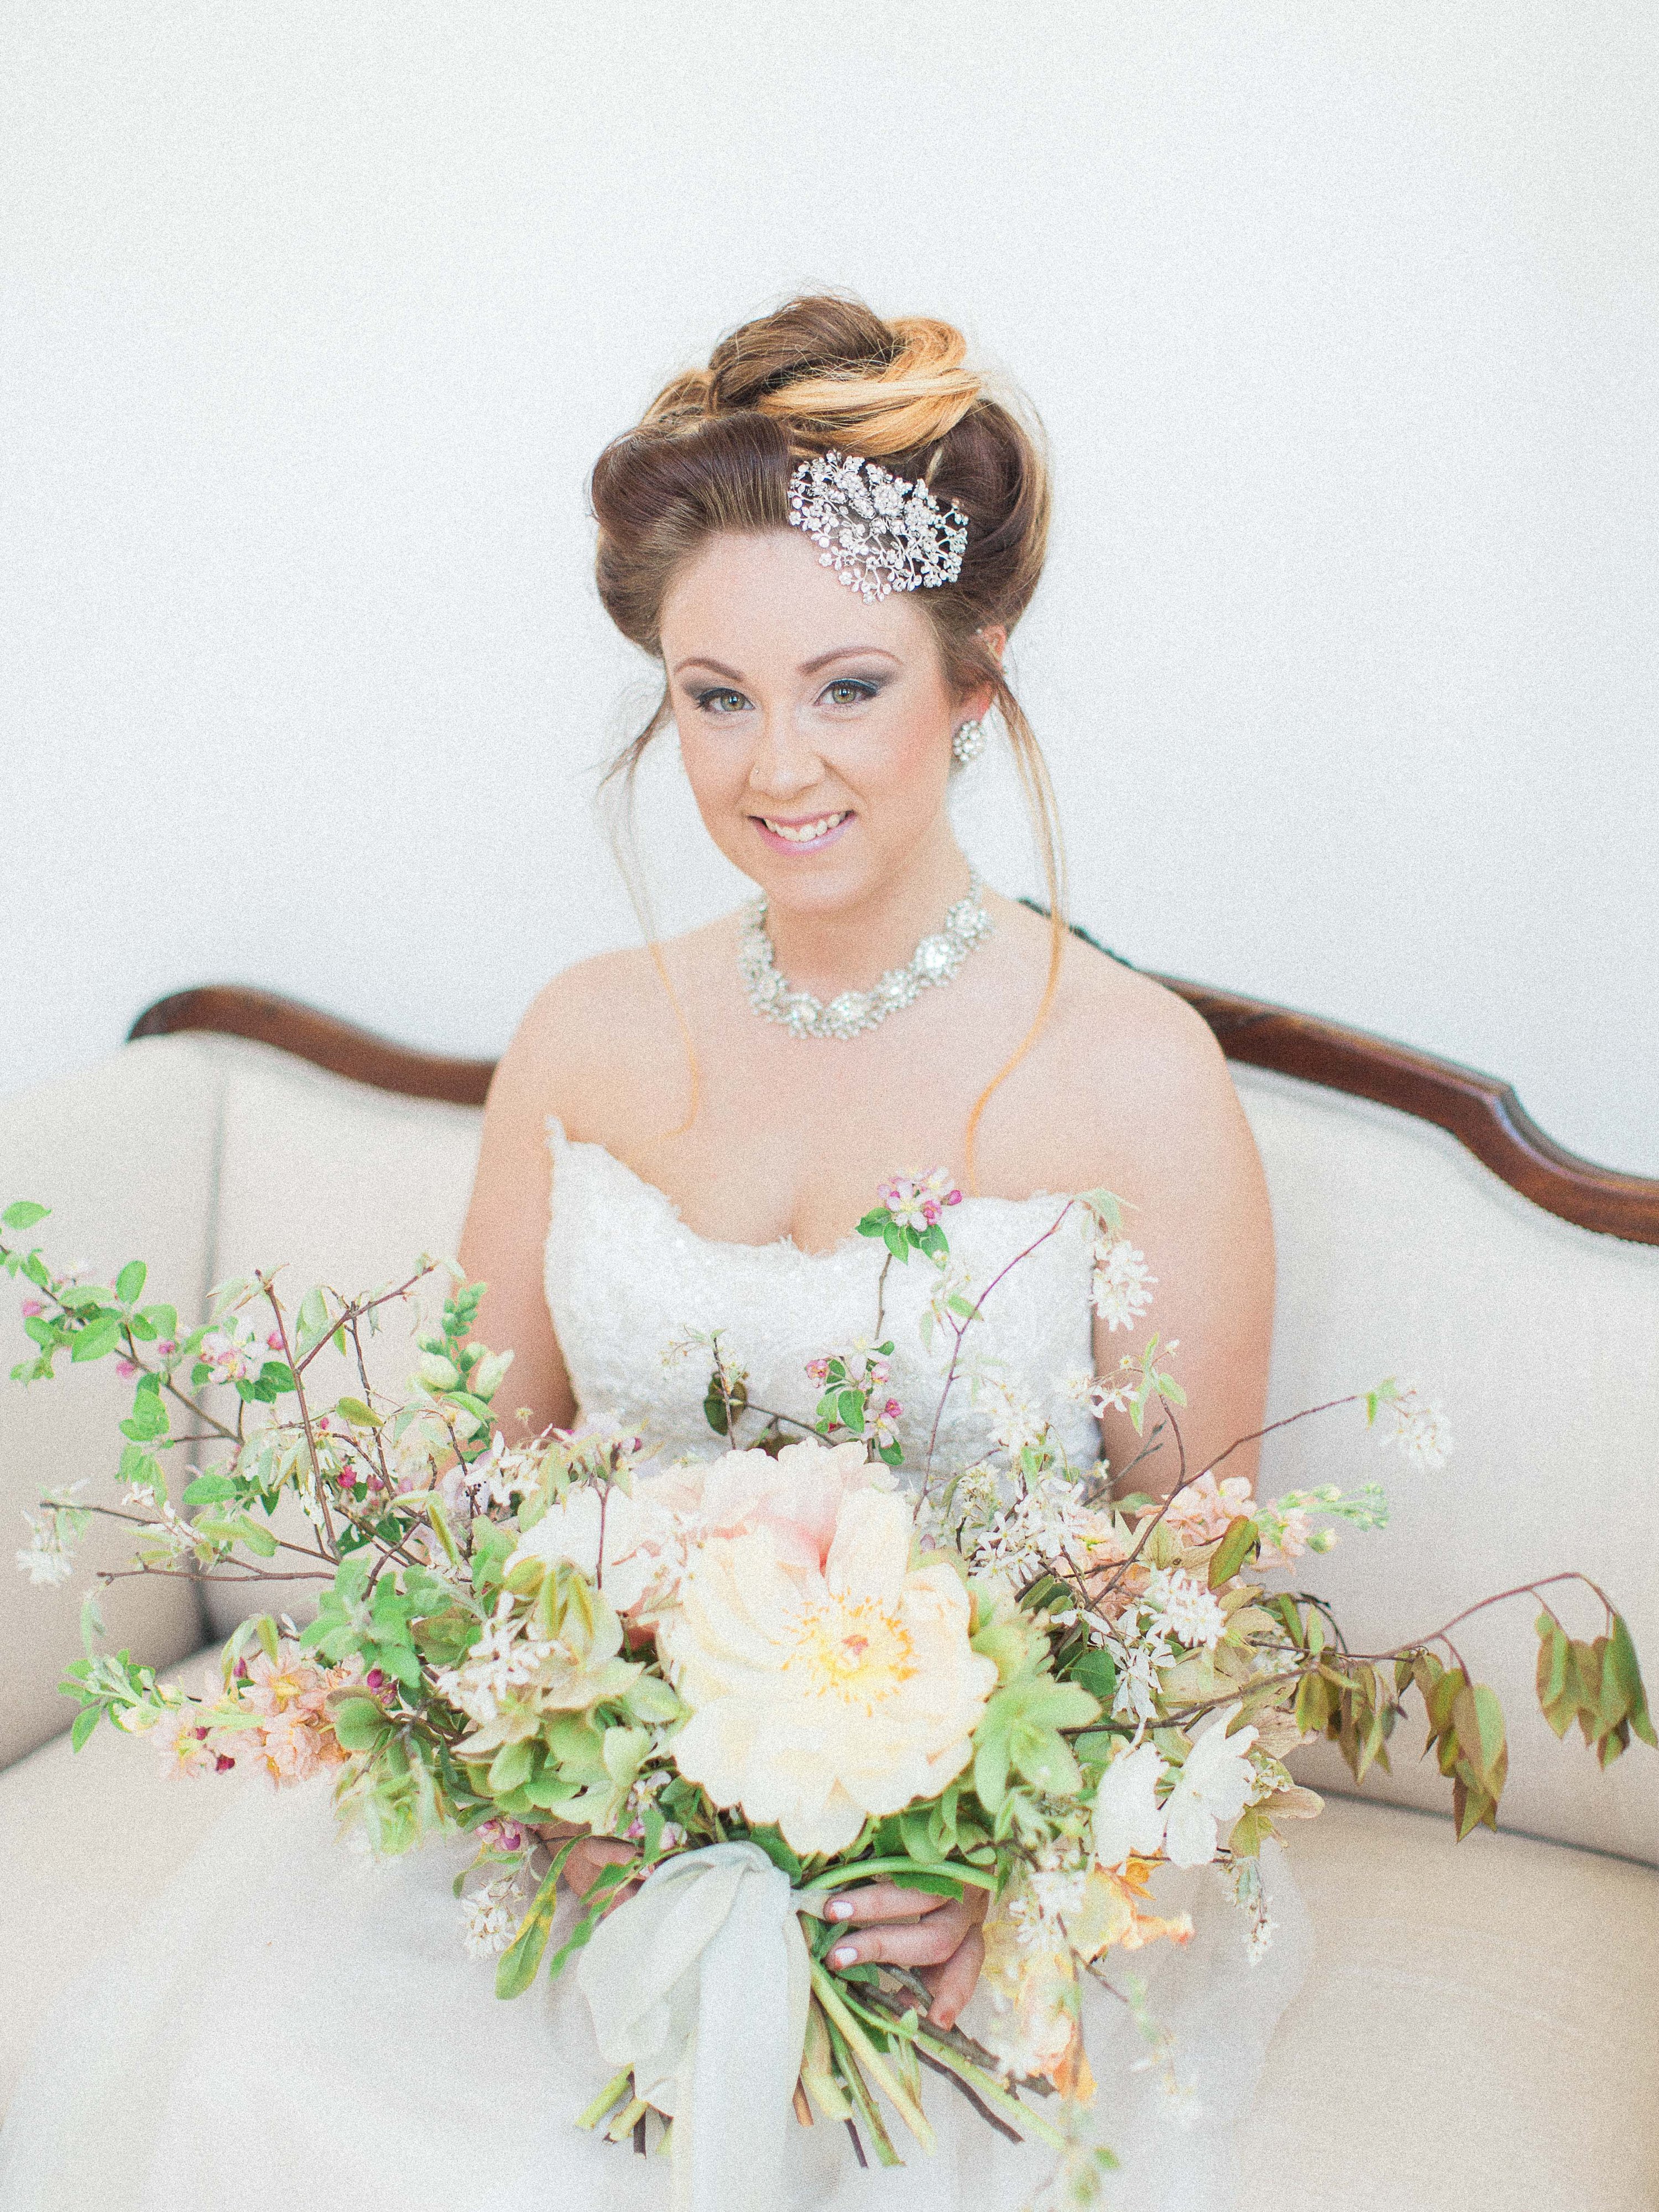 Romantic Bridal Portraits | Holland Michigan Wedding | The Day's Design | Samantha James Photography